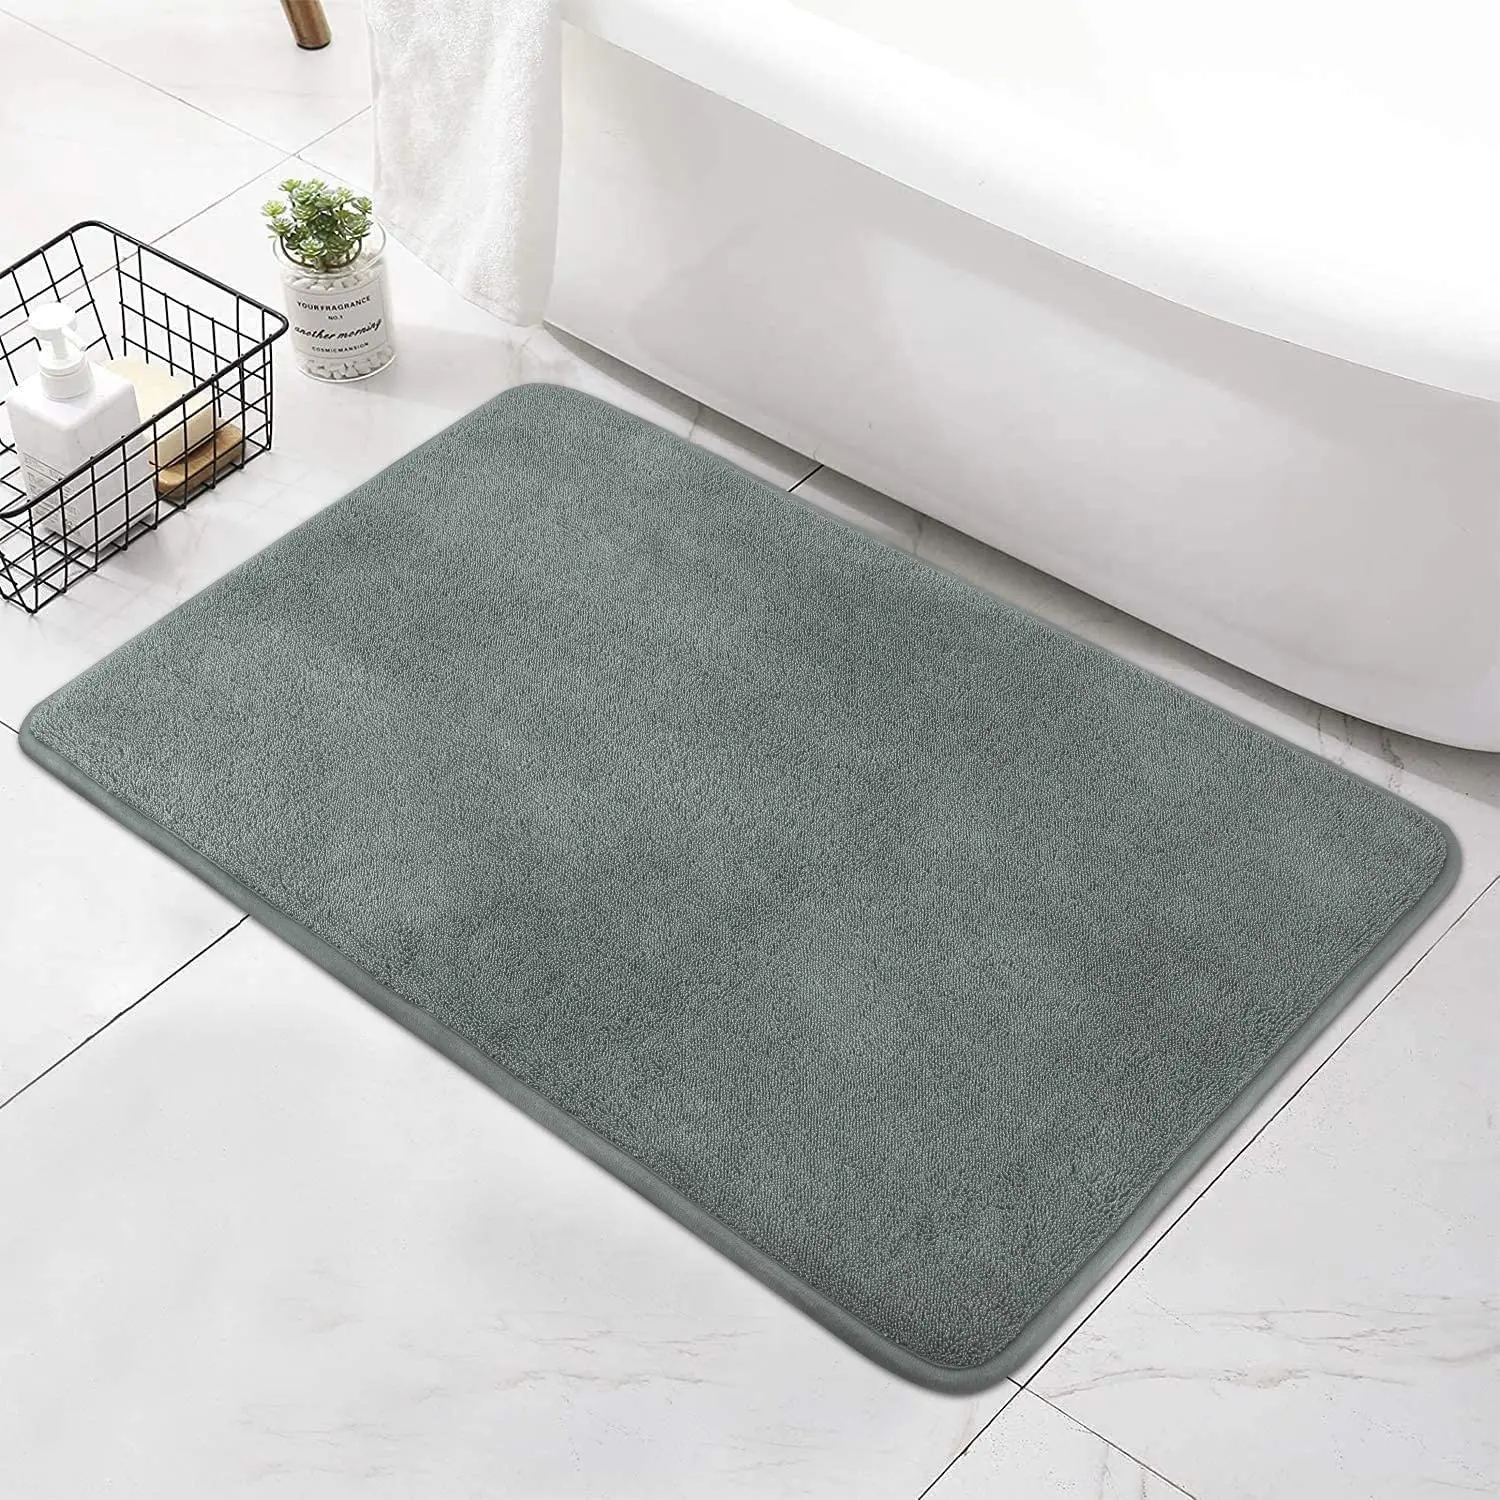 Custom Memory Foam Door Mat Bathroom Mat Carpet Non Slip Soft Microfiber Plush Absorbent Floorcloth Indoor Outdoor Grey Bath Mat